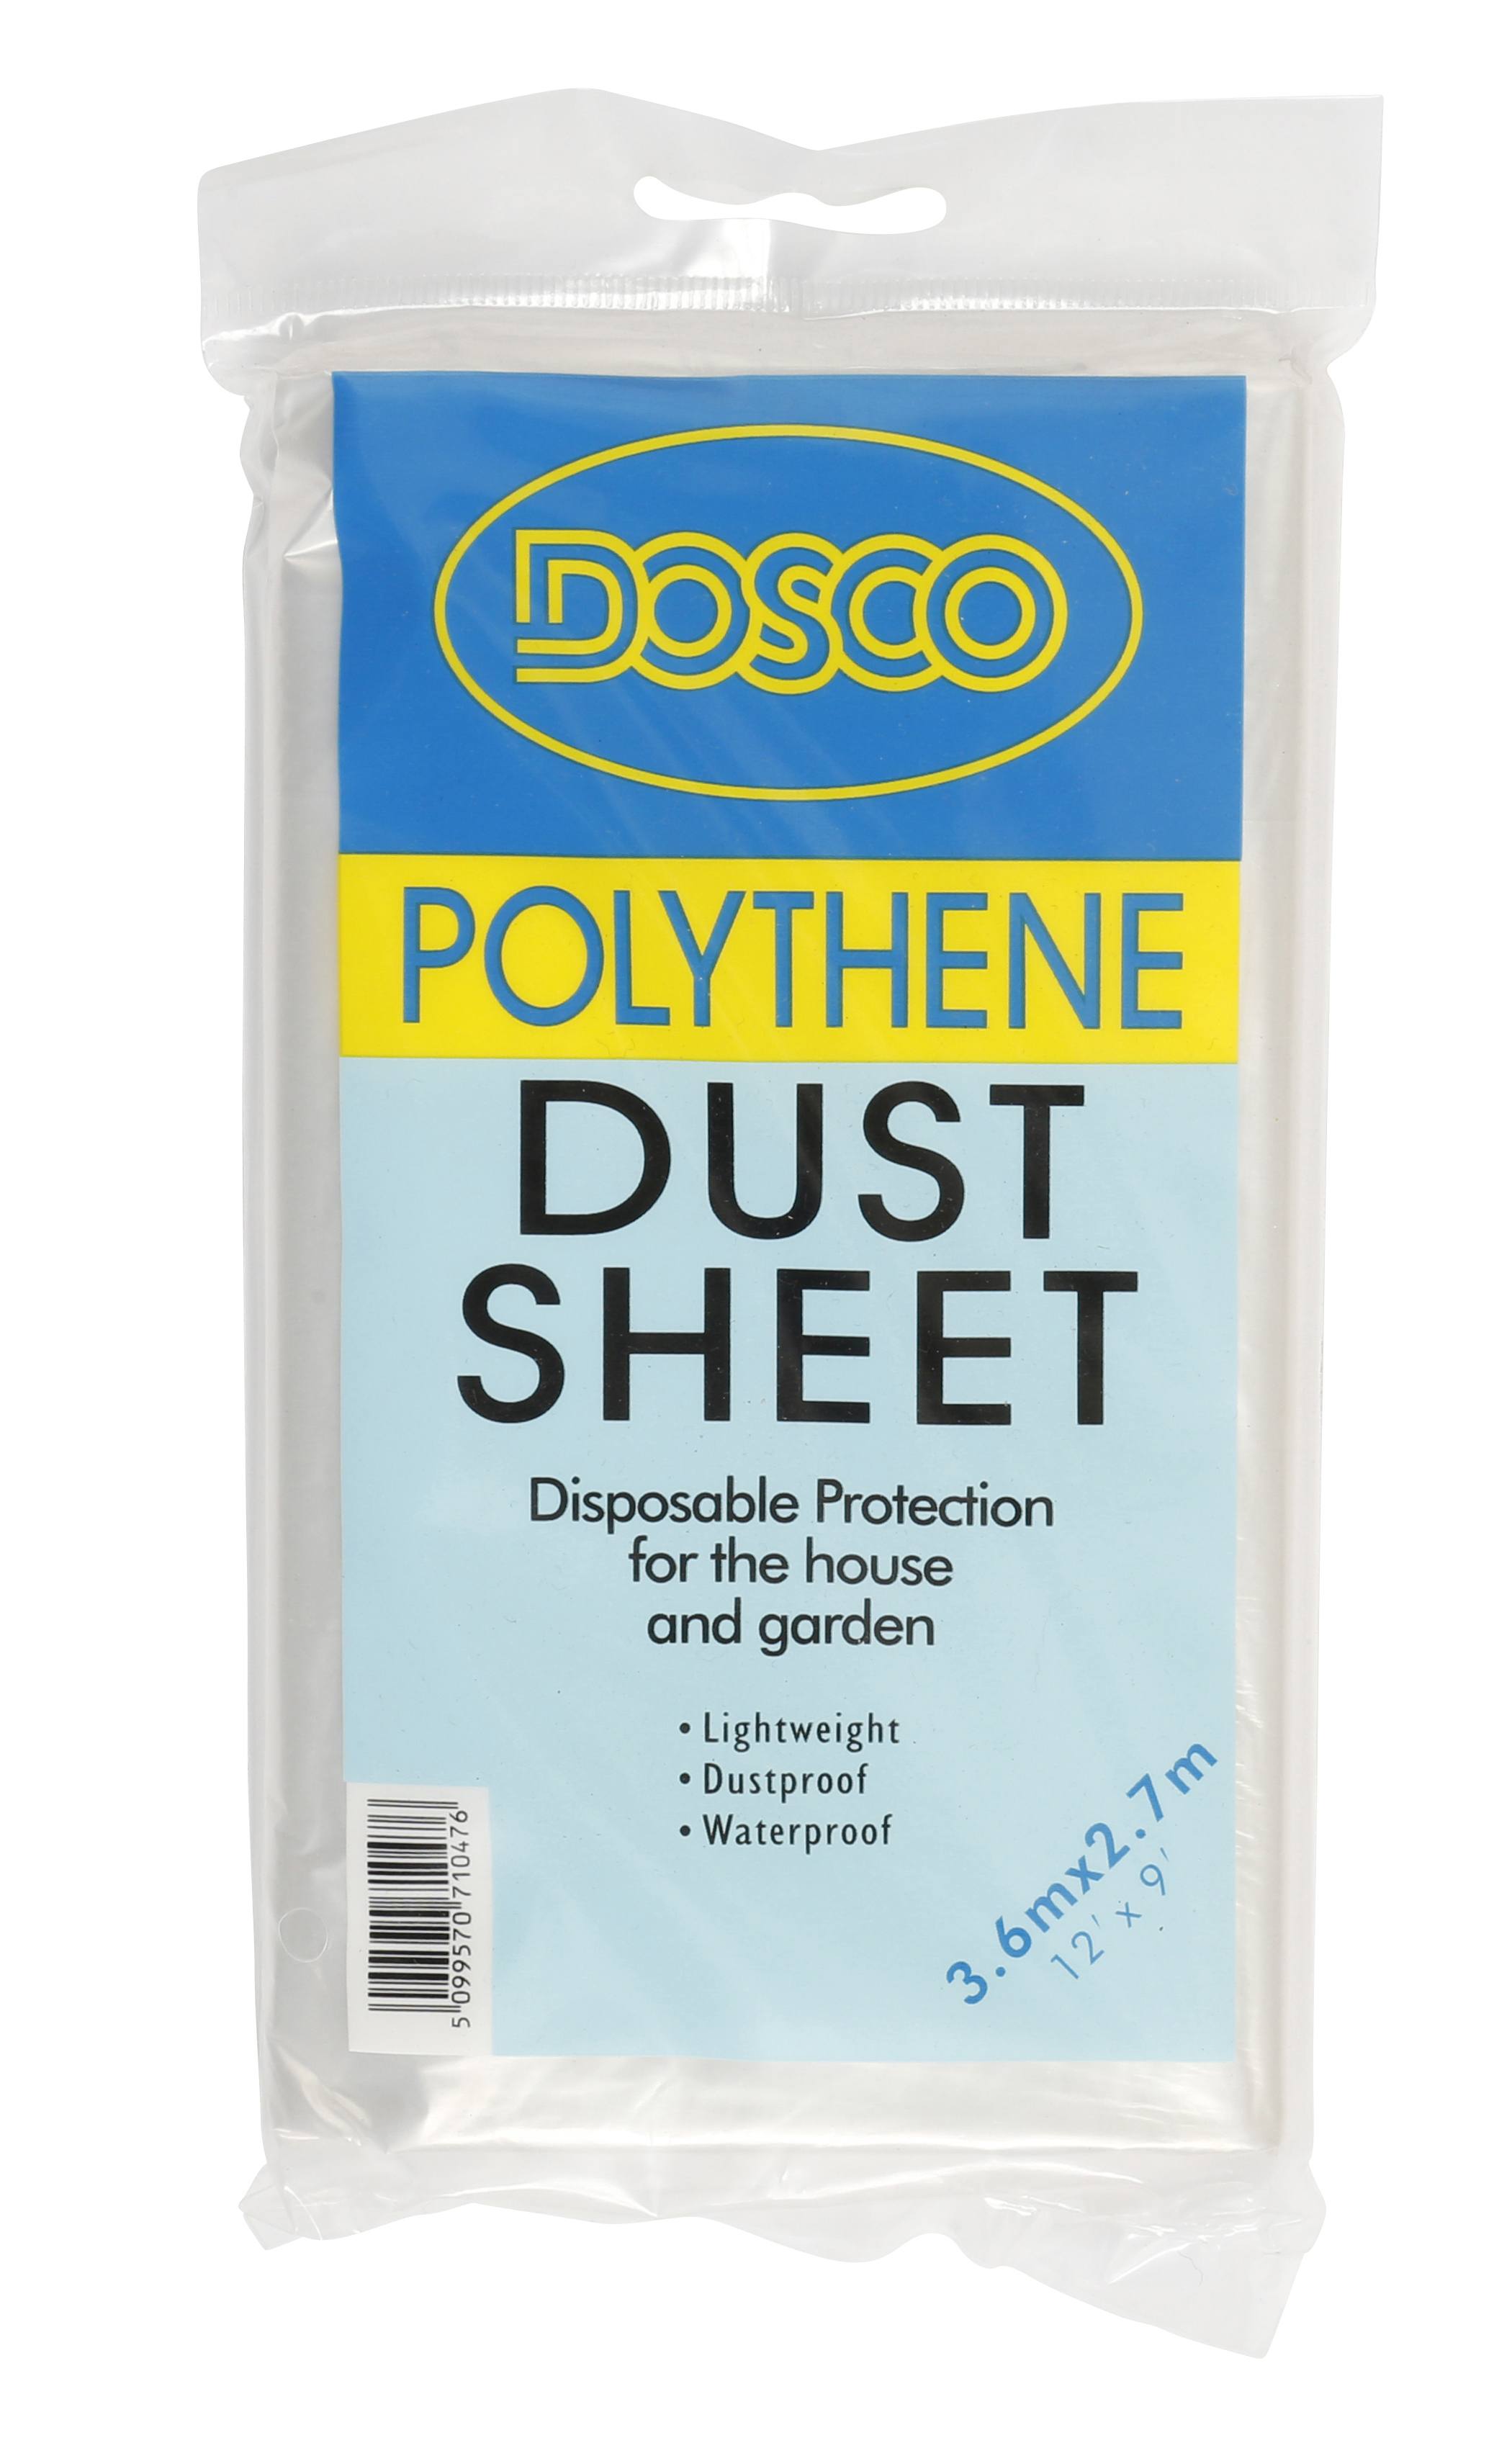 Dosco Polythene Dust Sheet